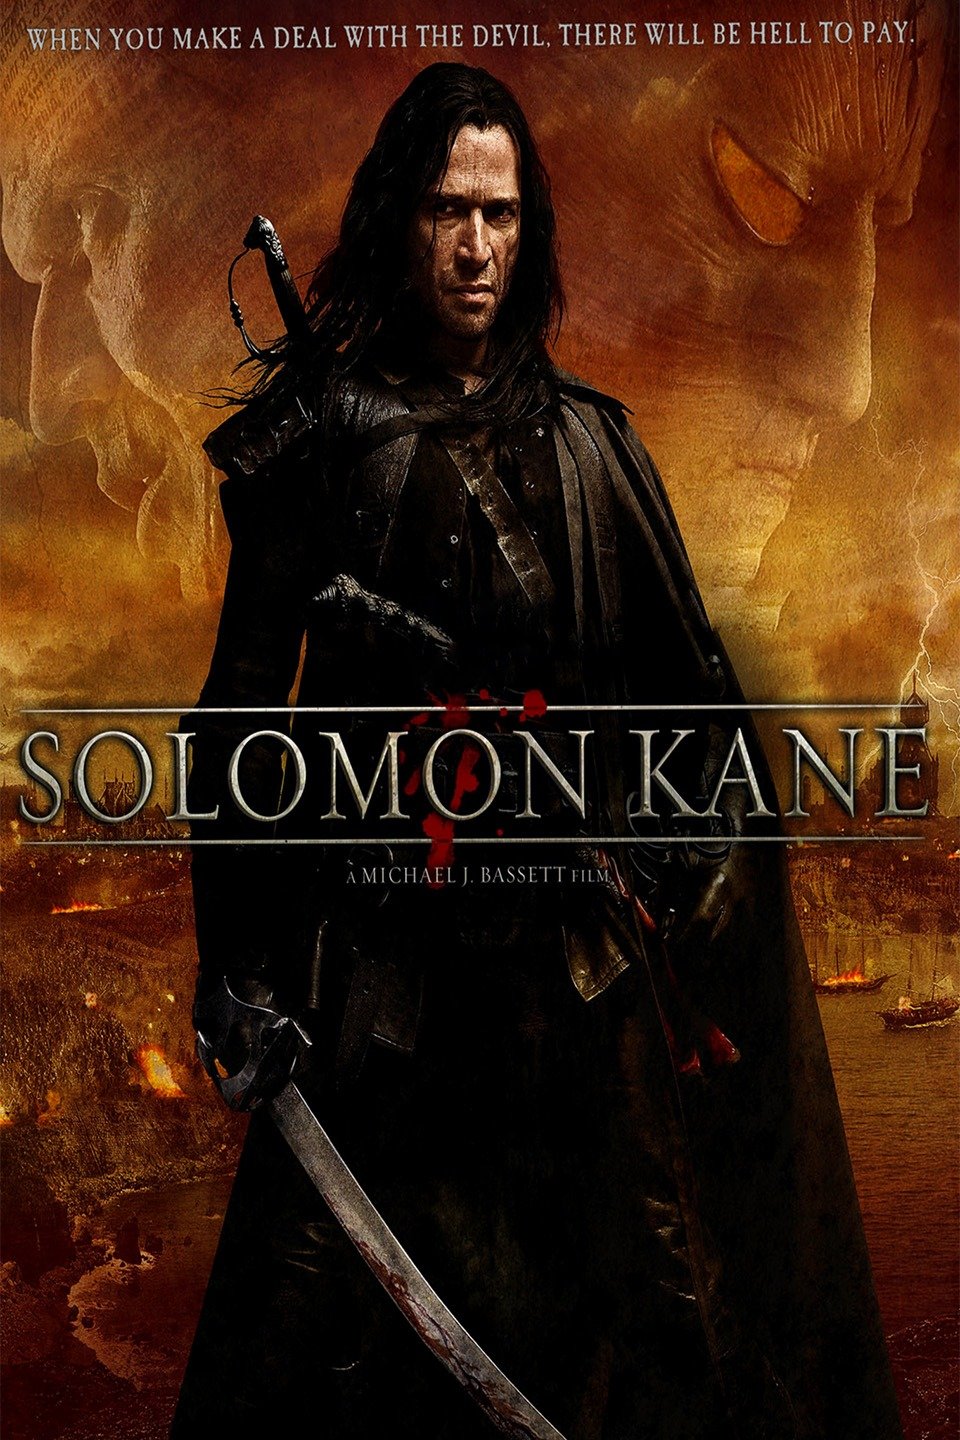 [MINI-HD] Solomon Kane (2009) โซโลมอน ตัดหัวผี [1080p] [พากย์ไทย 5.1 + เสียงอังกฤษ DTS] [บรรยายไทย + อังกฤษ] [เสียงไทย + ซับไทย] [OPENLOAD]